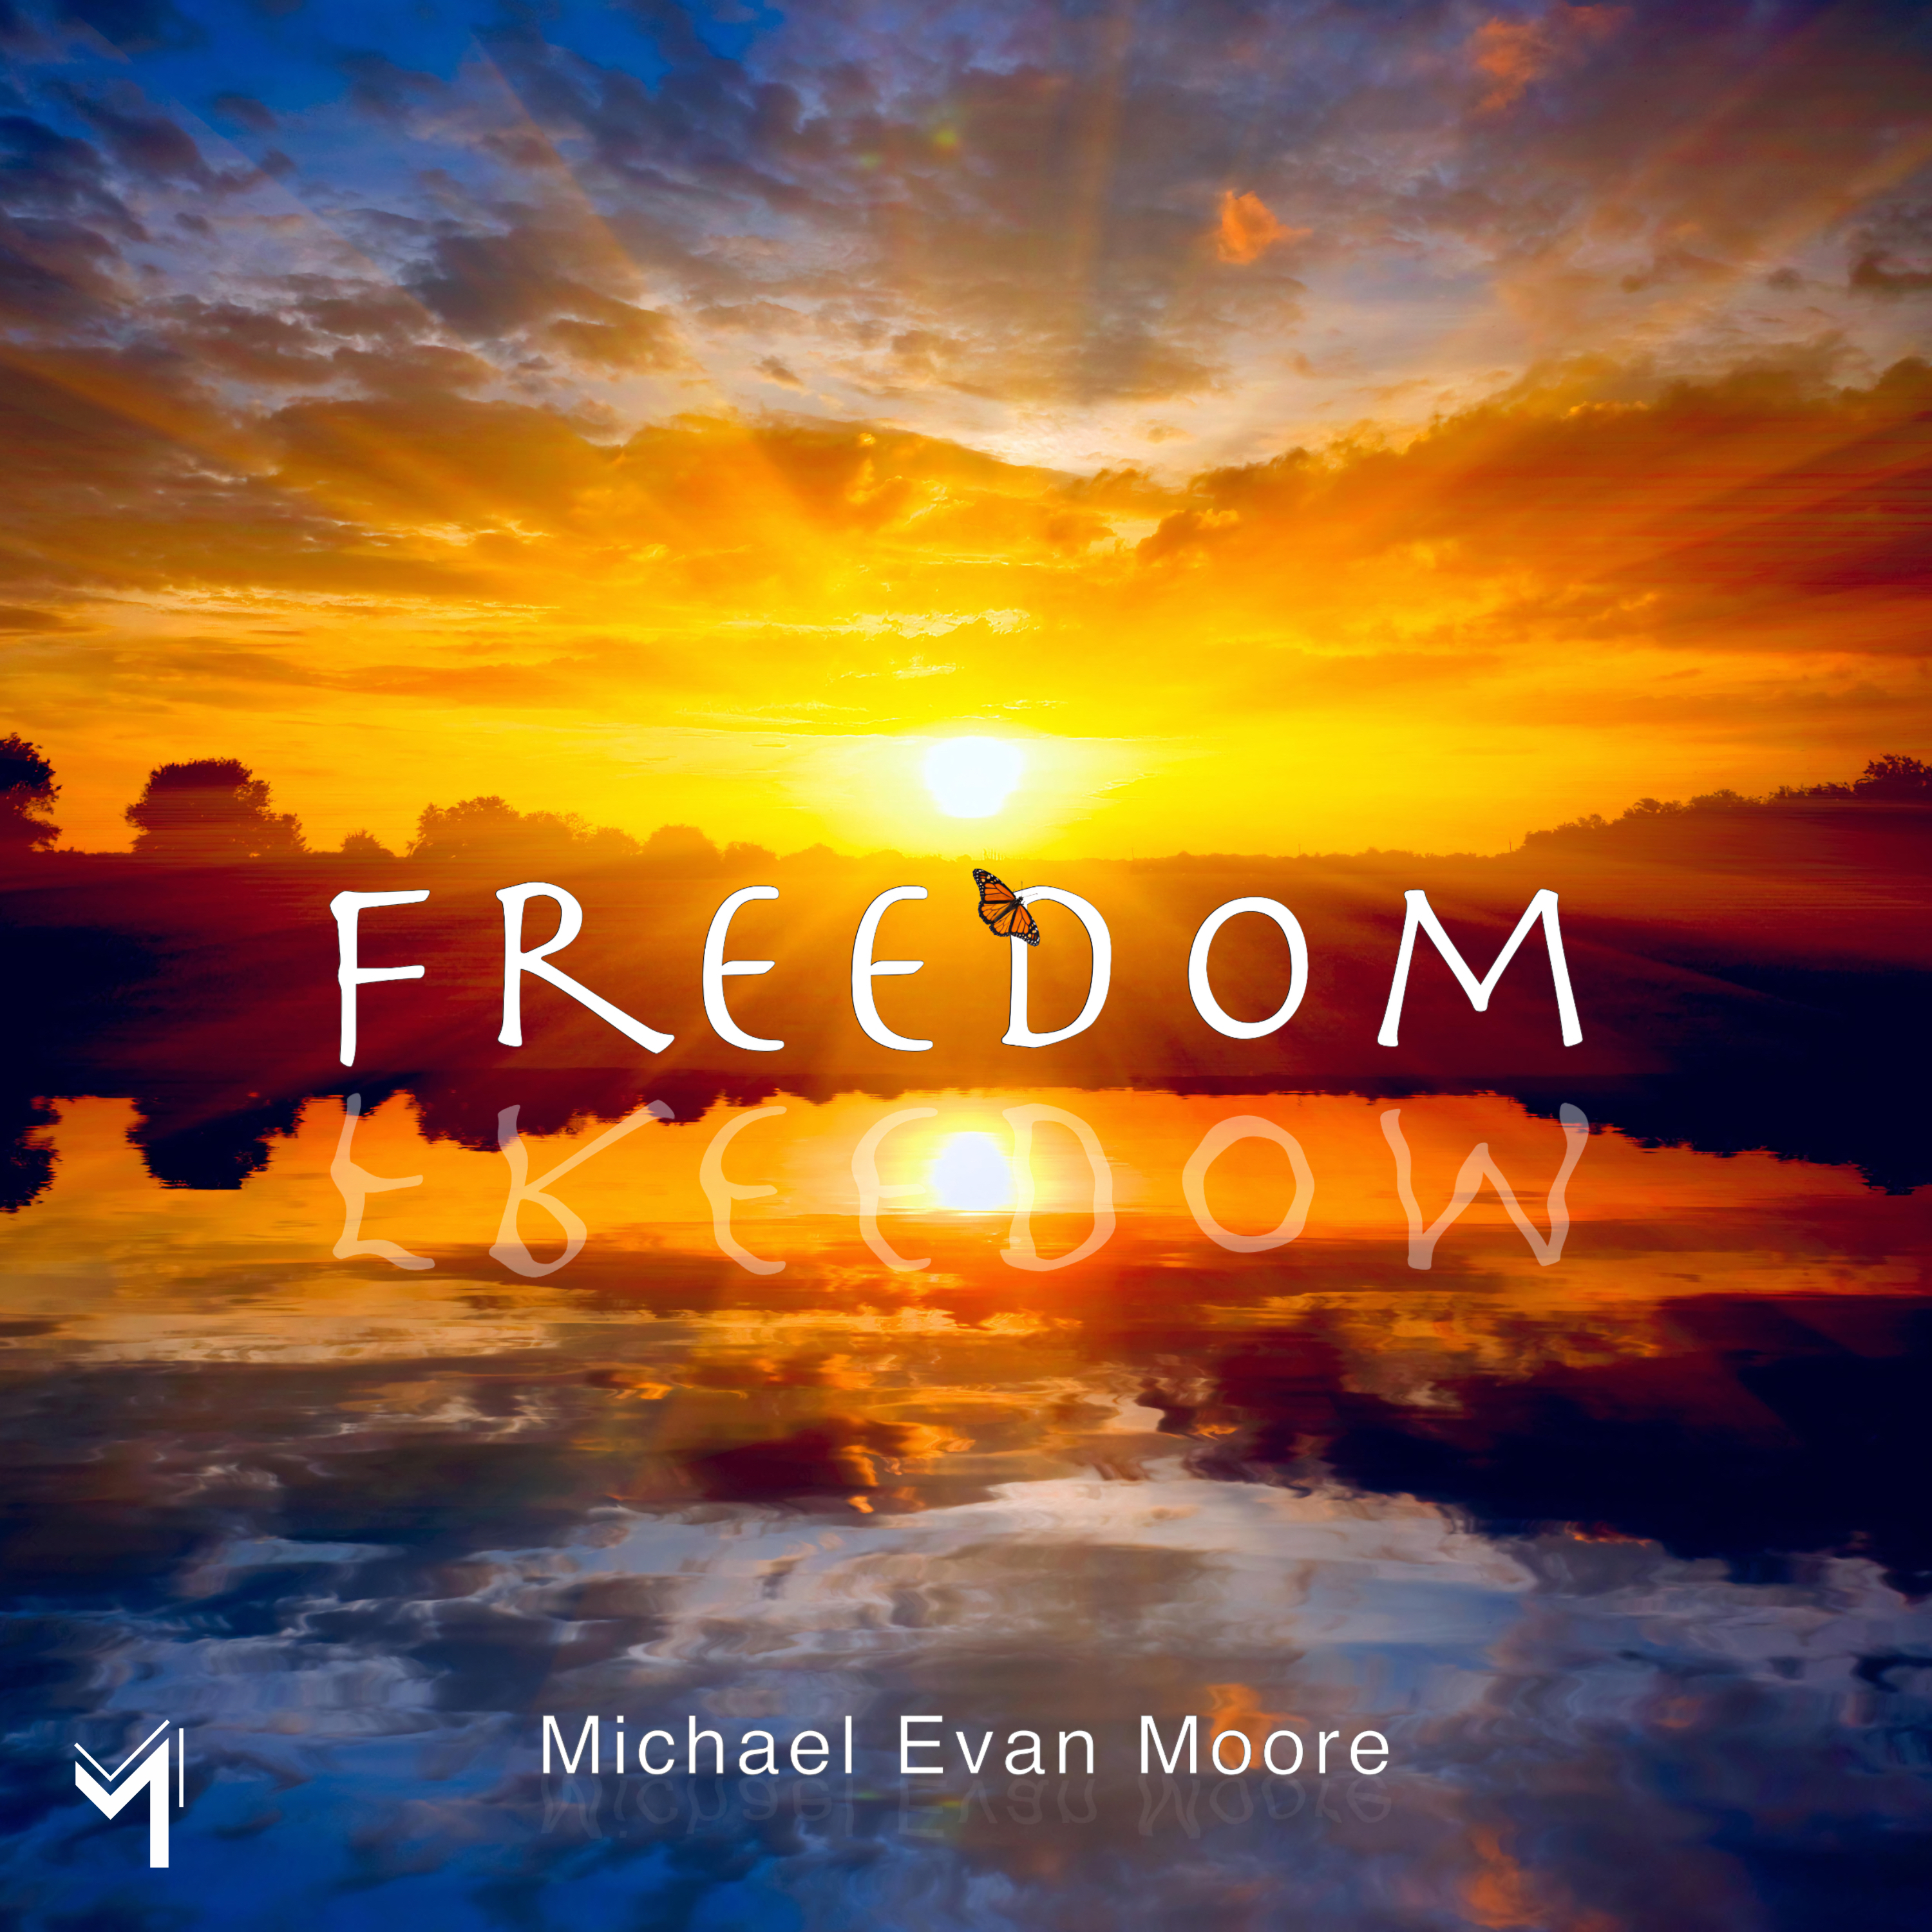 Freedom Album Art with M Logo by Michael Evan Moore